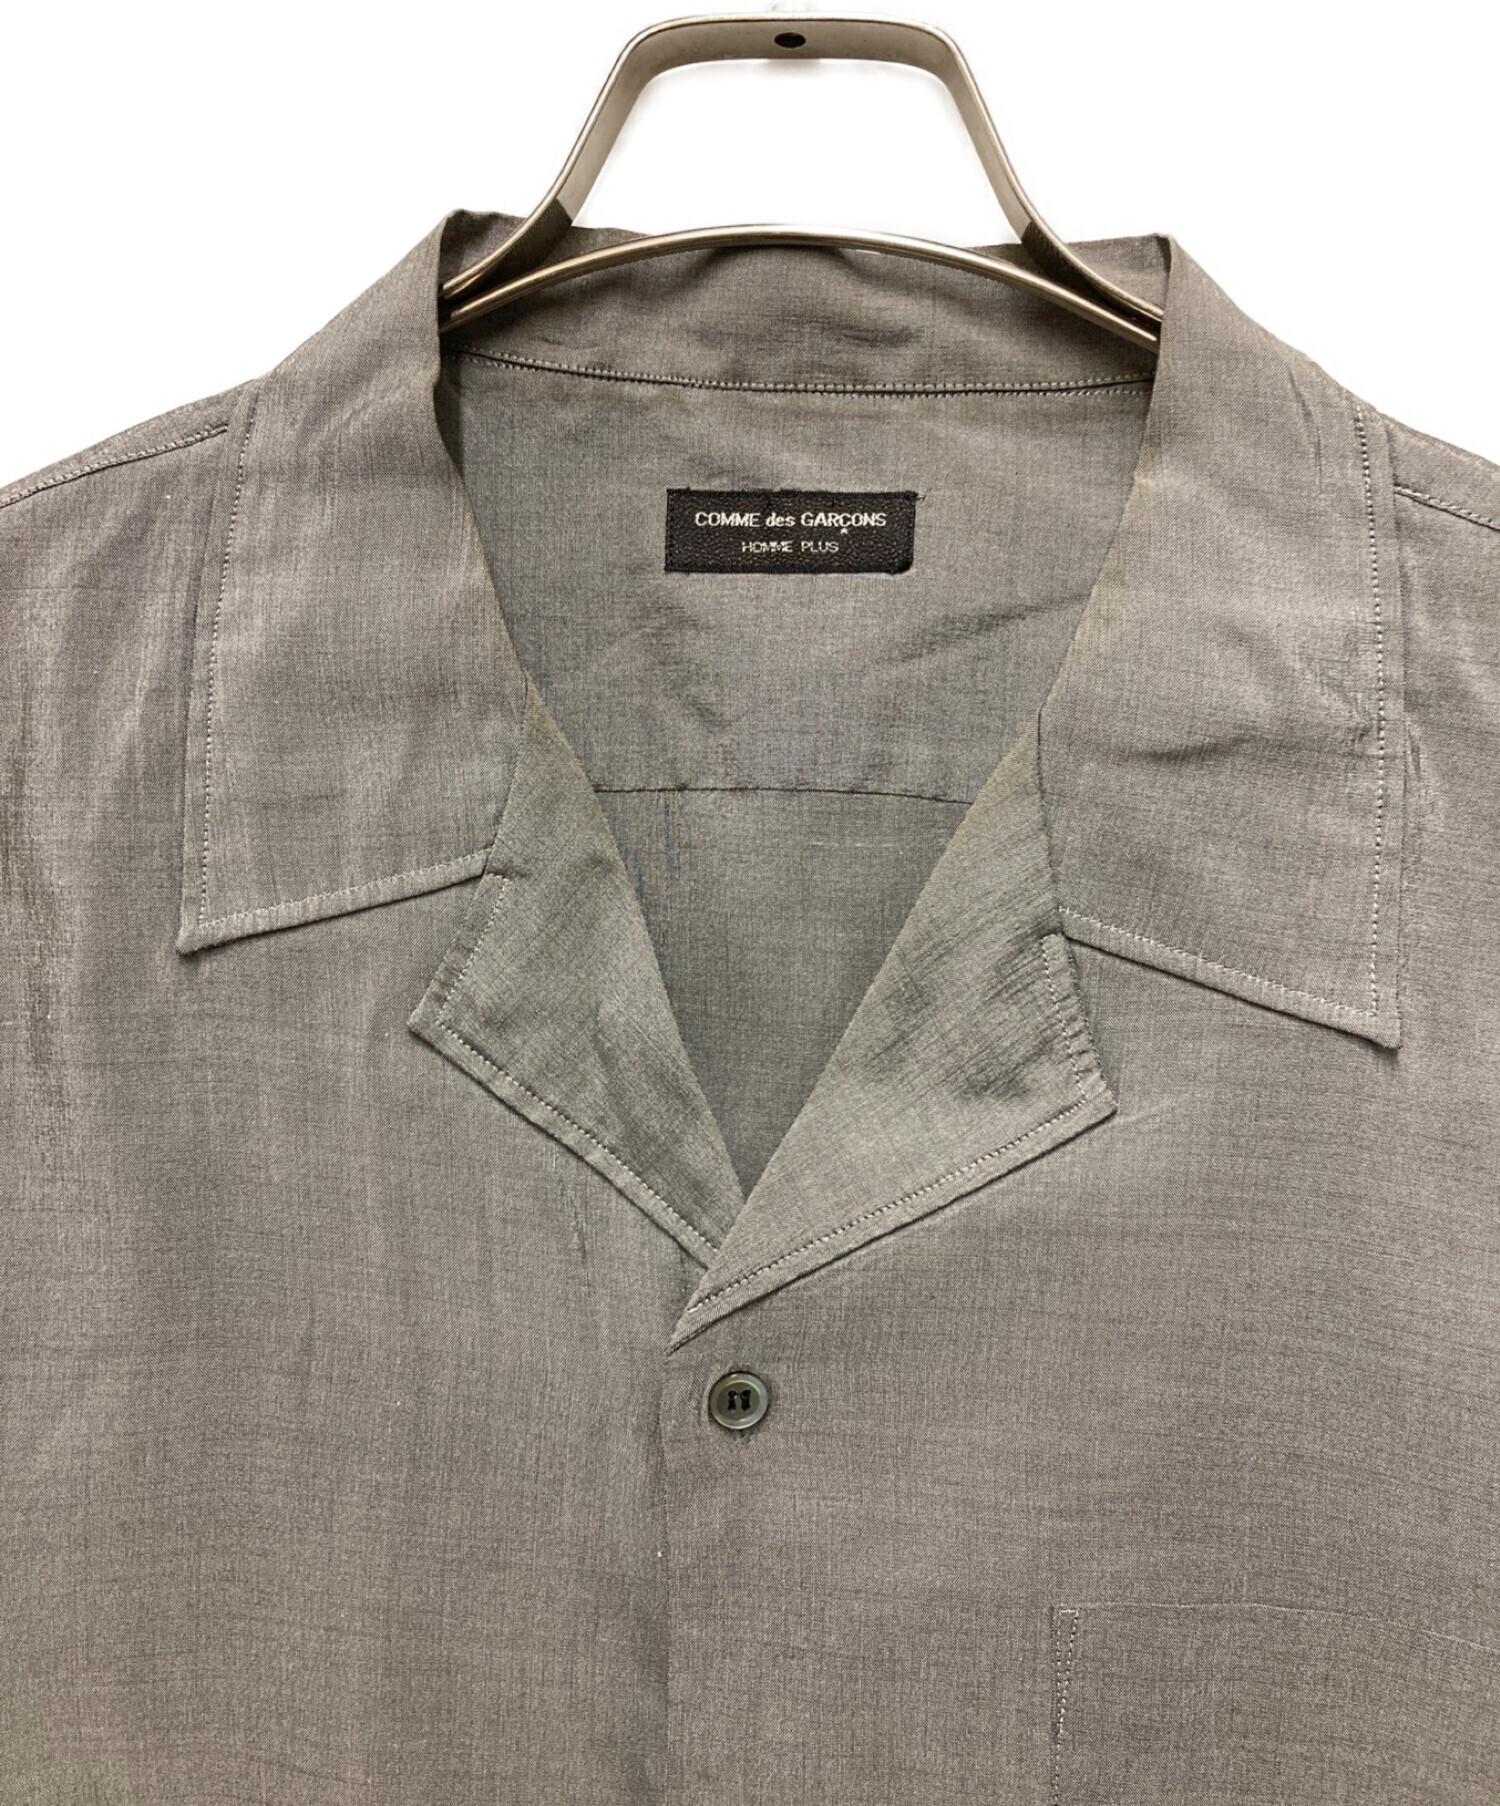 COMME des GARCONS HOMME PLUS (コムデギャルソンオムプリュス) シルクポリオープンカラーシャツ　 AD1997 アーカイブ  襟縫い付けデザイン グレー サイズ:表記無